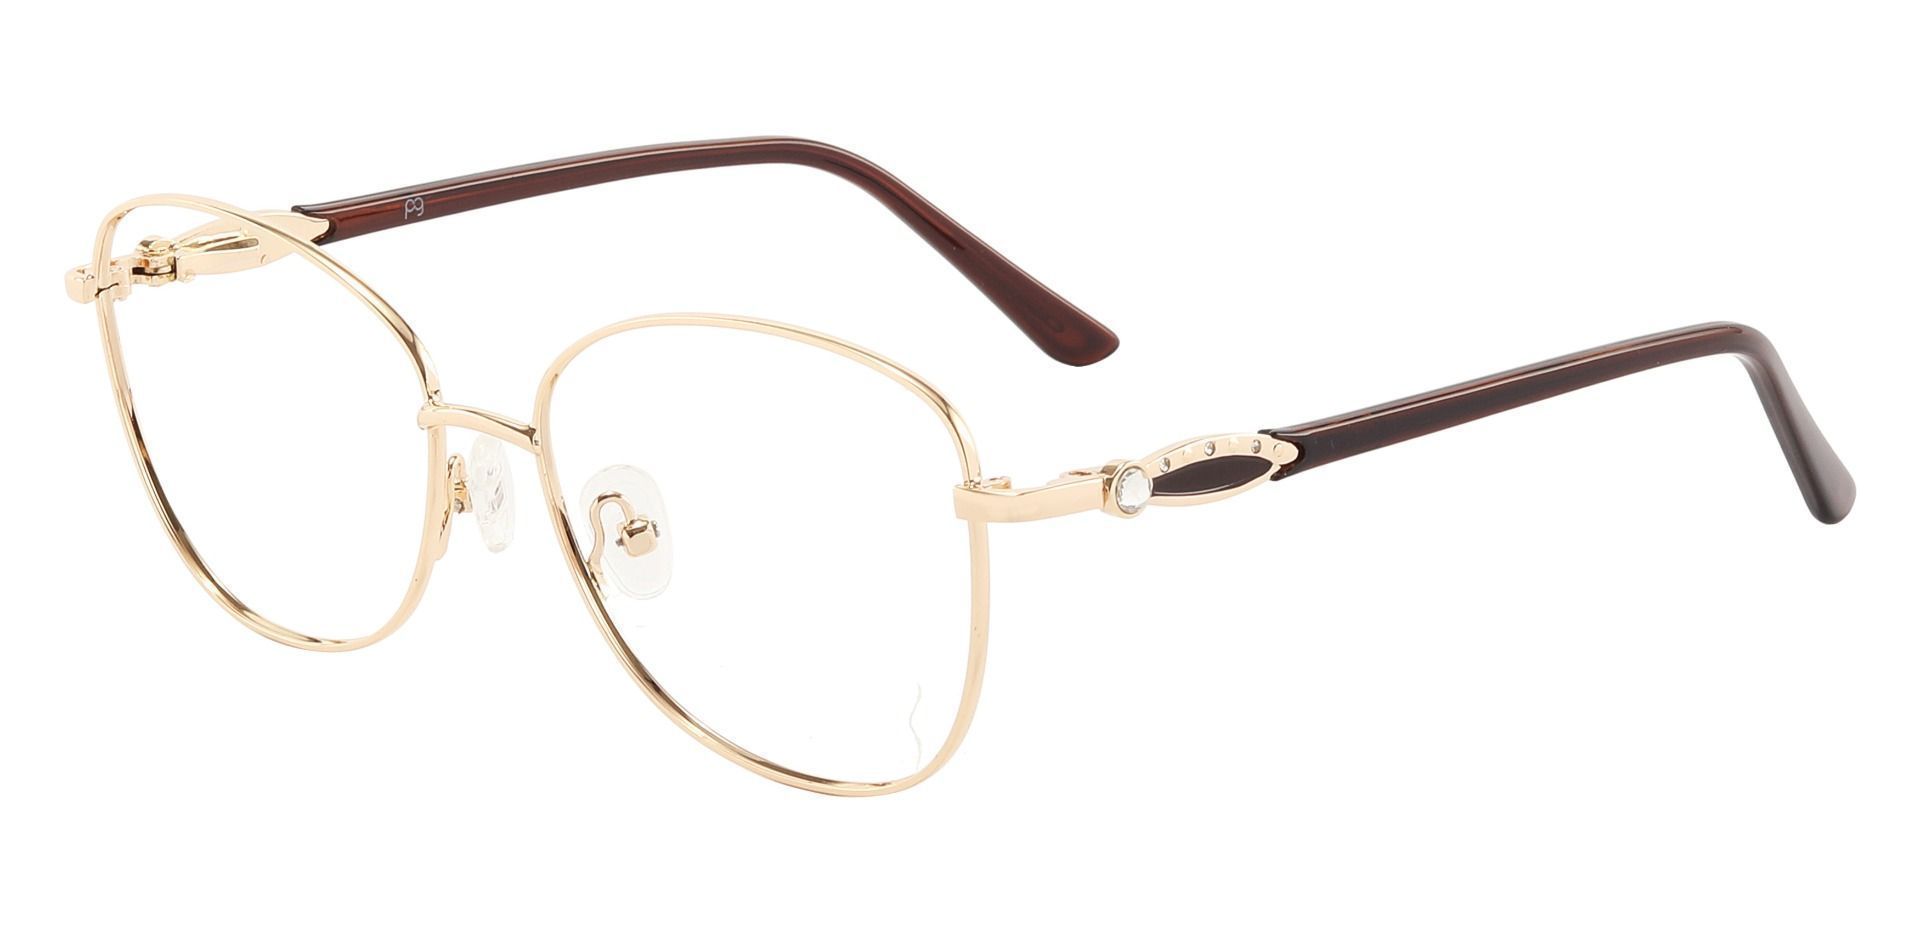 Almena Oval Progressive Glasses - Gold